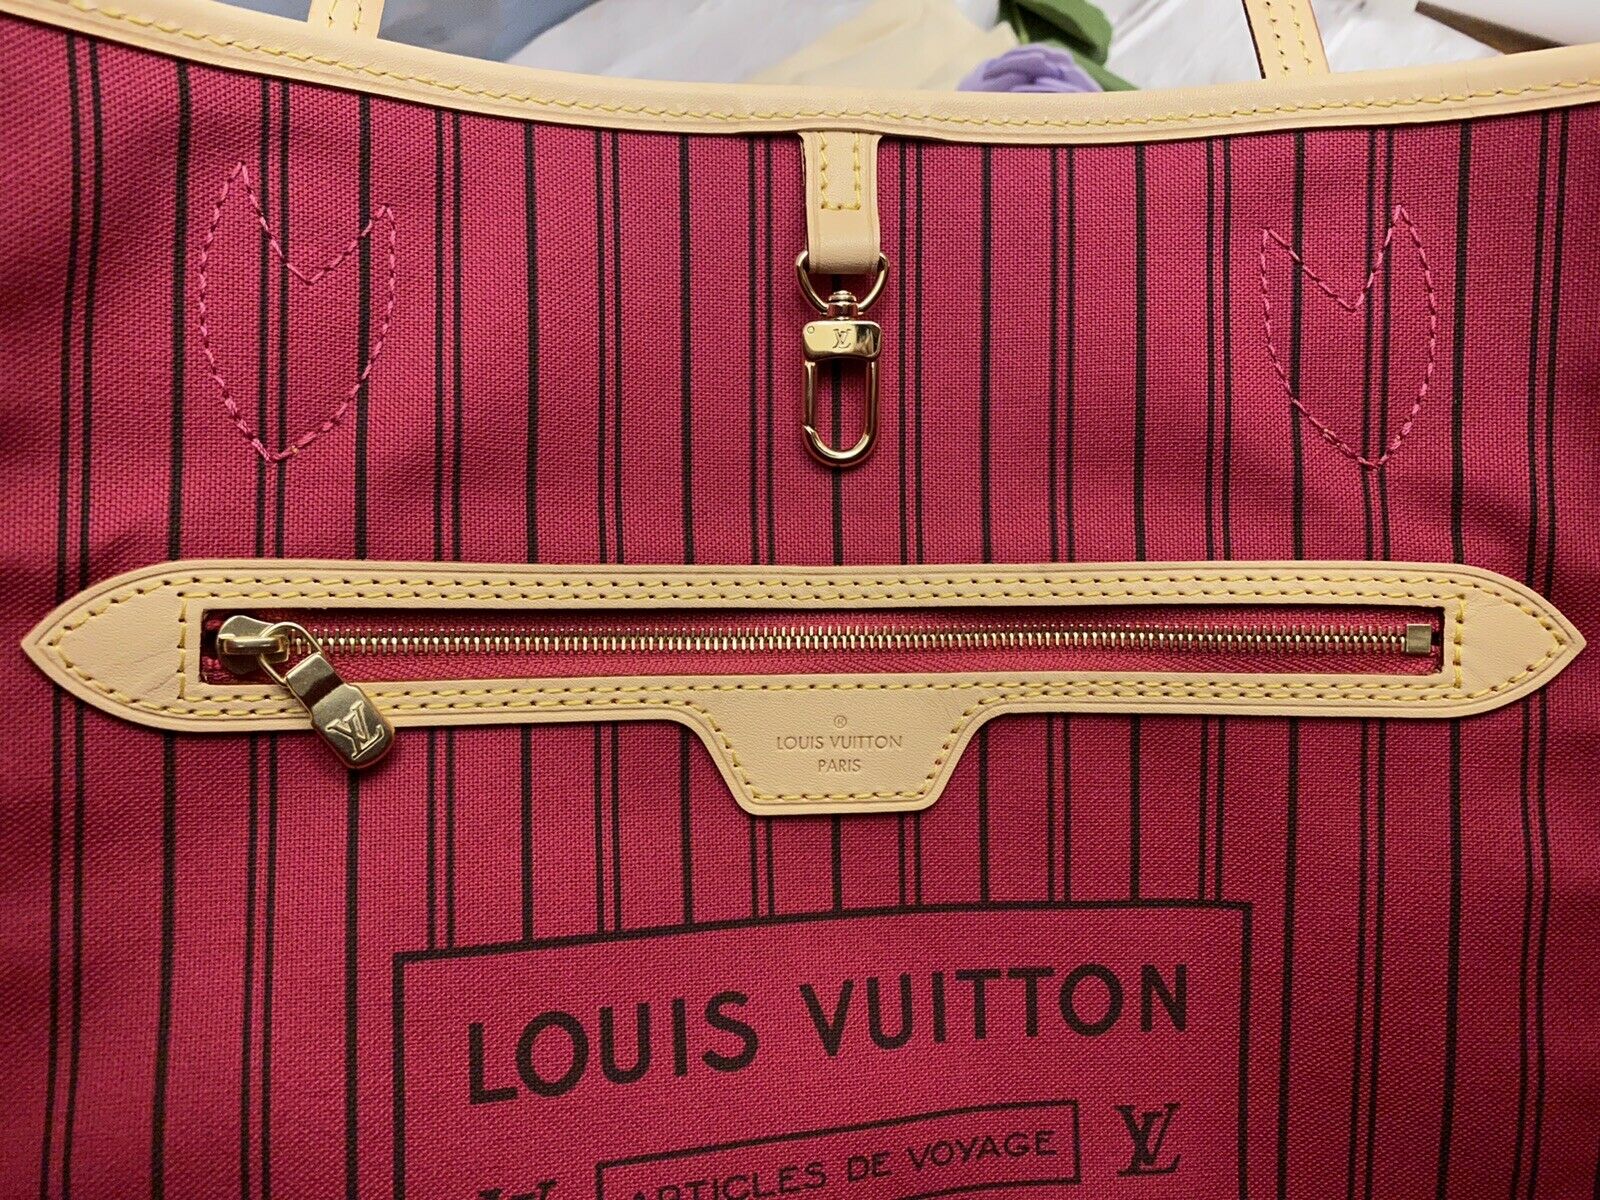 🌸 Louis Vuitton Neverfull MM Monogram Pivoine Shoulder Tote